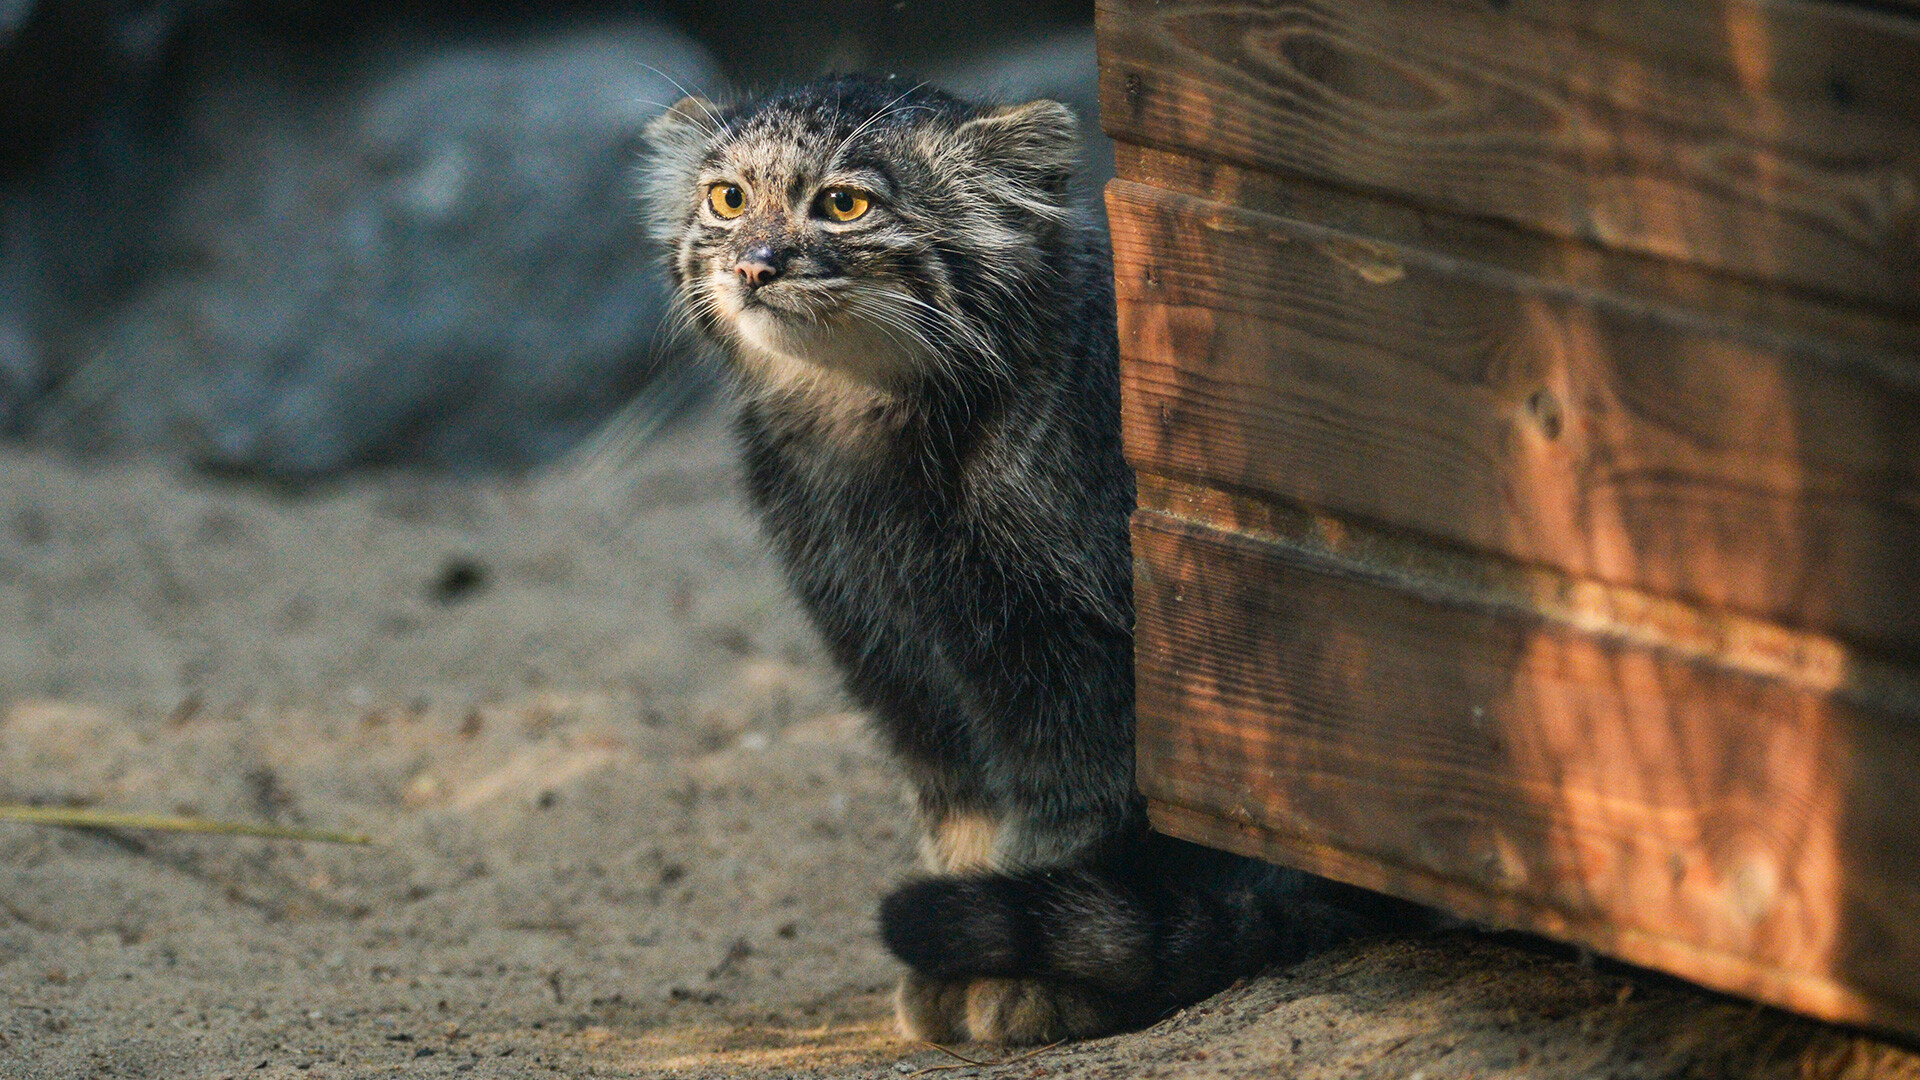 This kitten was born in 2015.